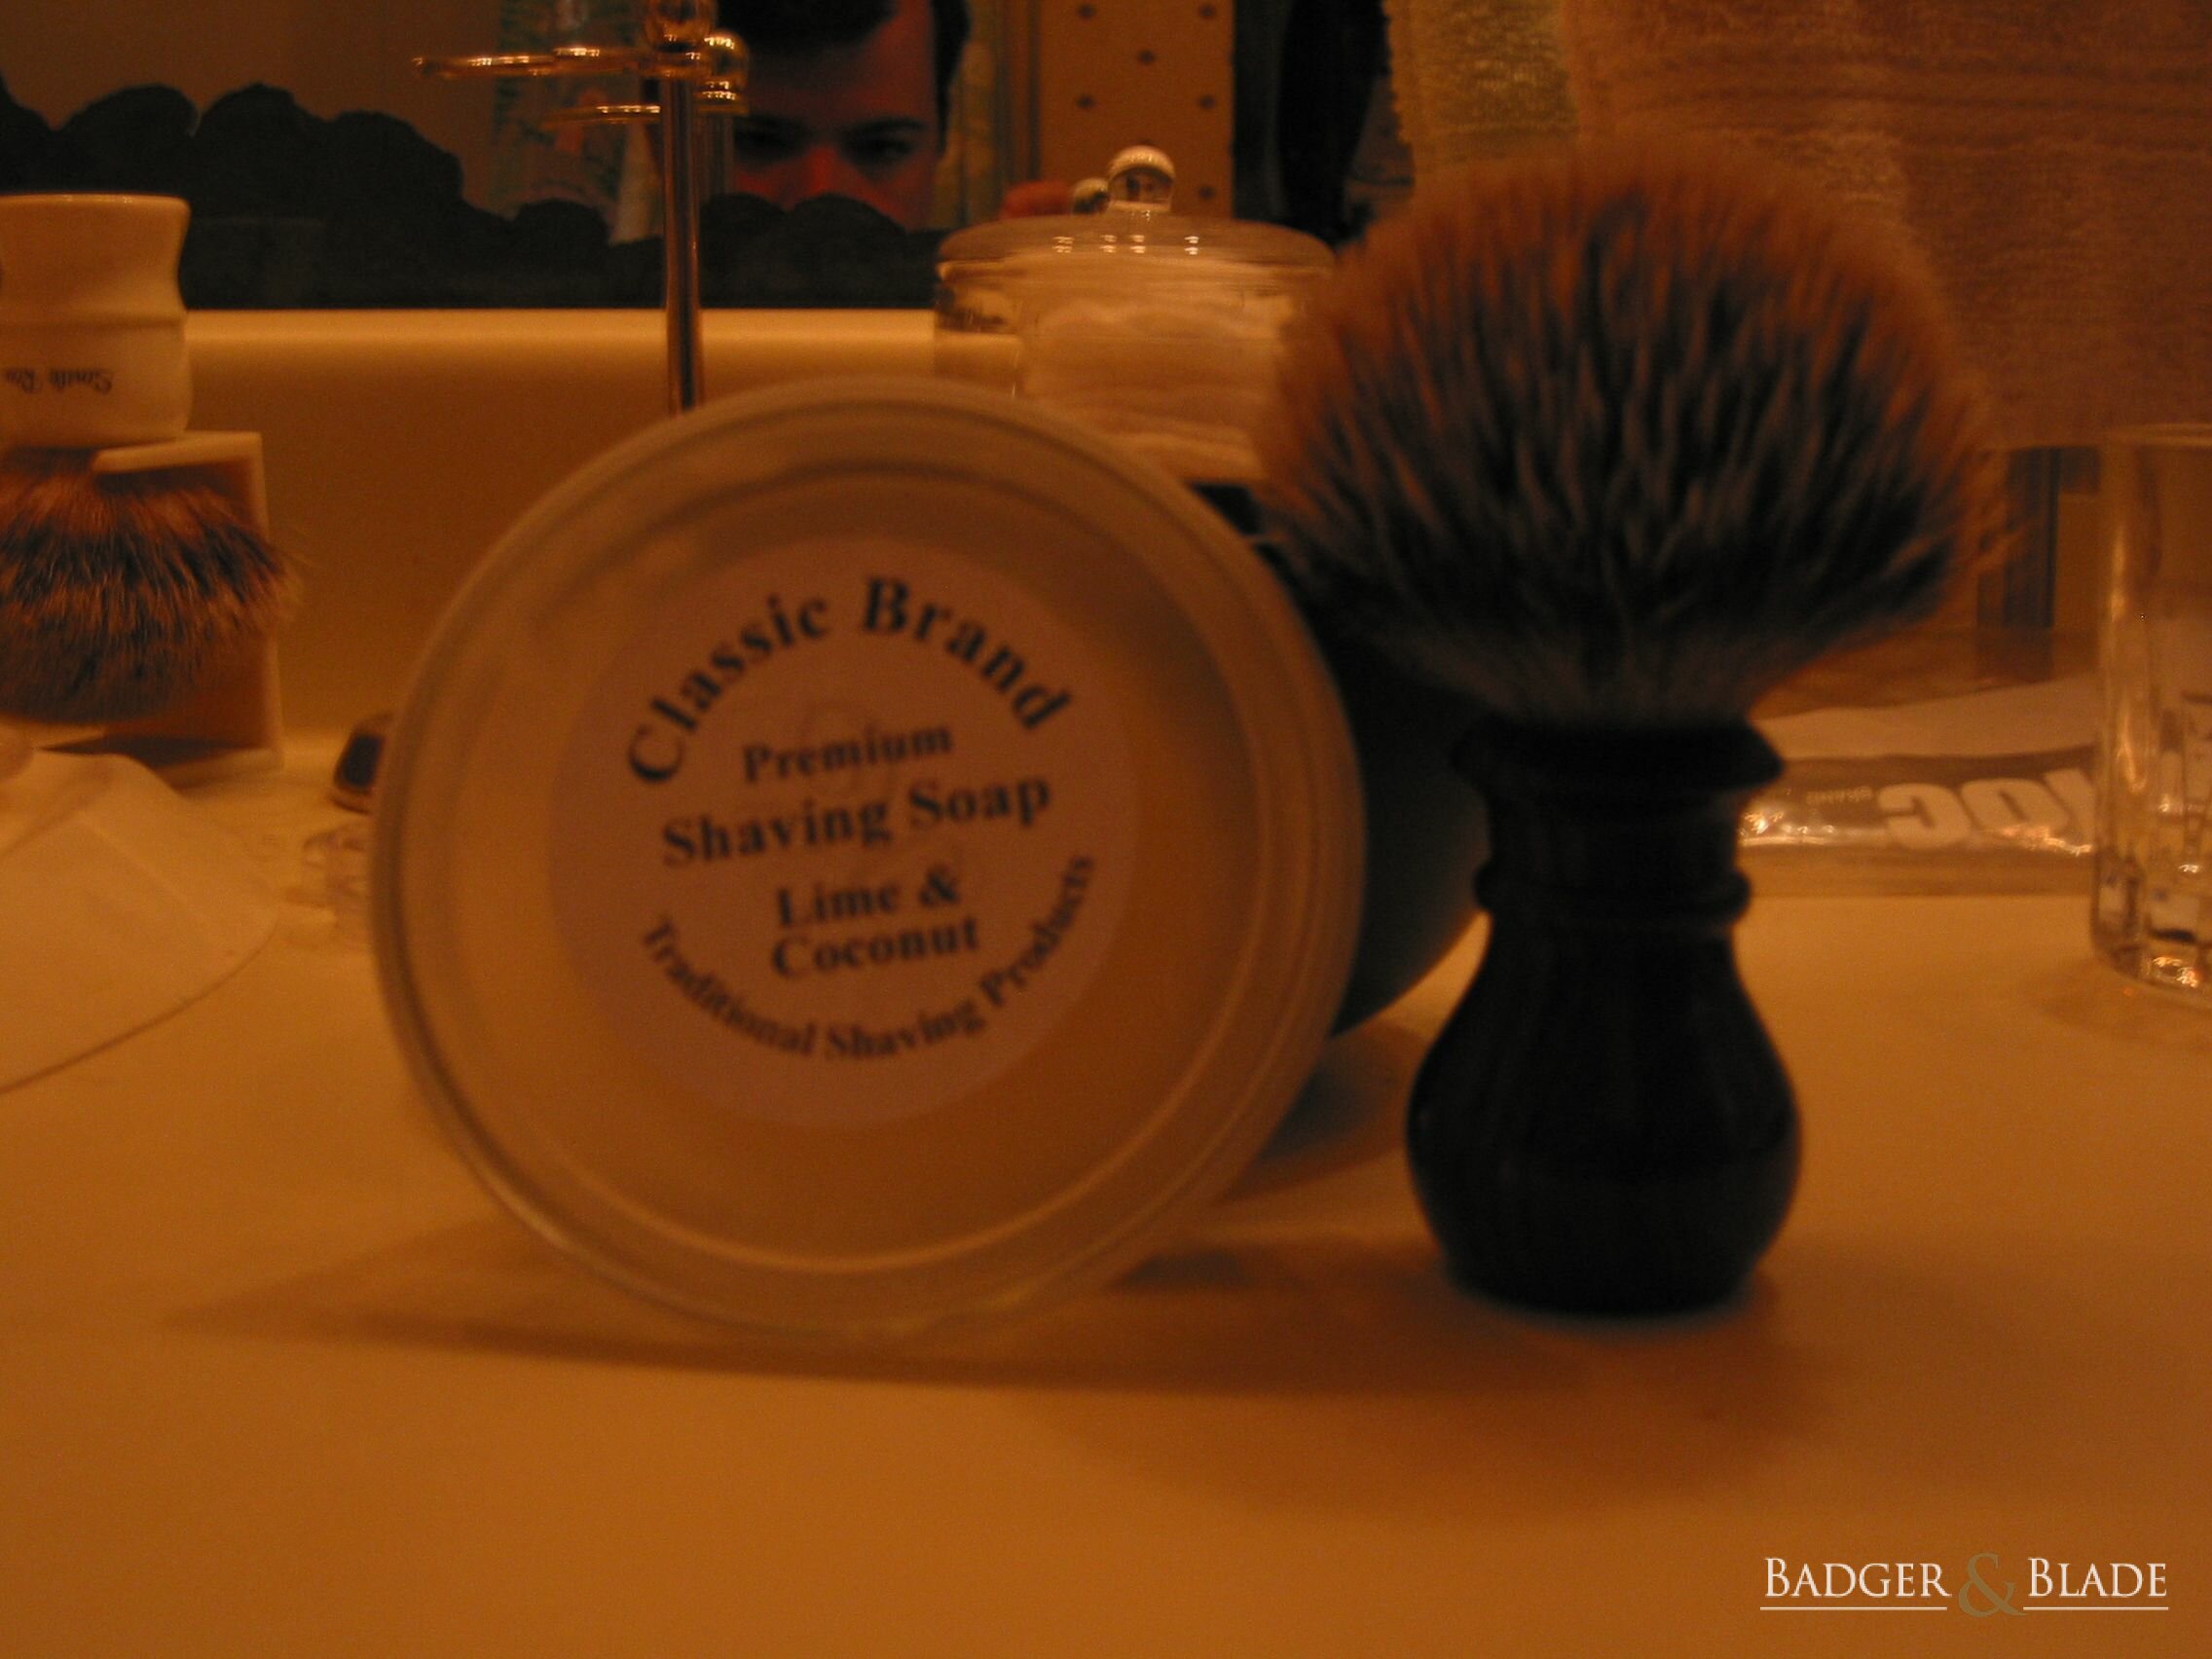 Classic Shaving Soap